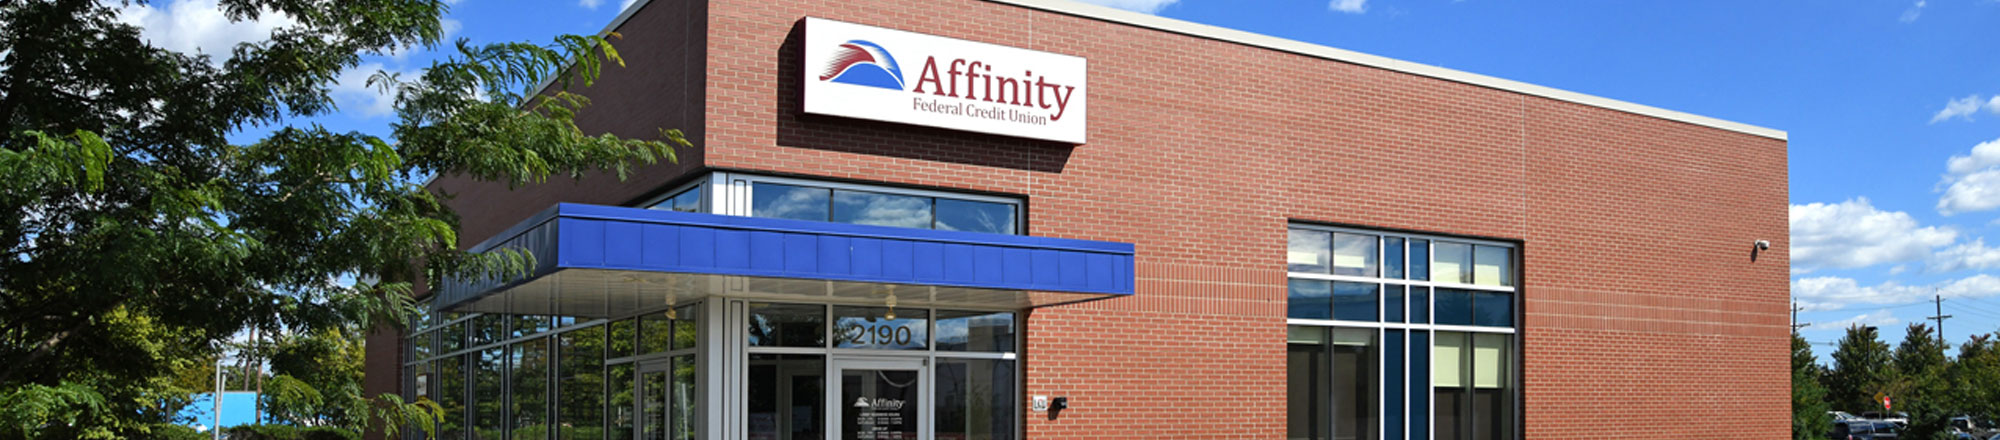 Affinity branch Edison, NJ